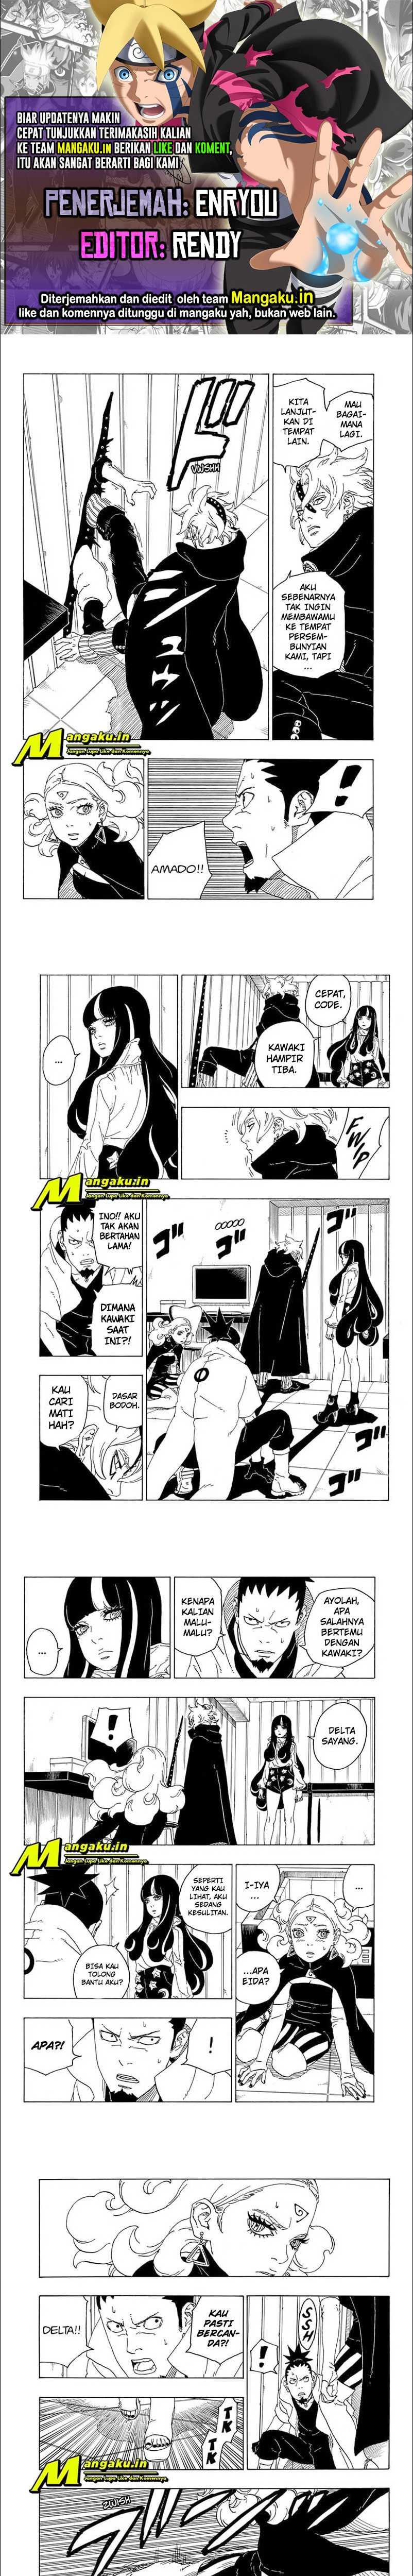 Boruto: Naruto Next Generations: Chapter 70.2 - Page 1